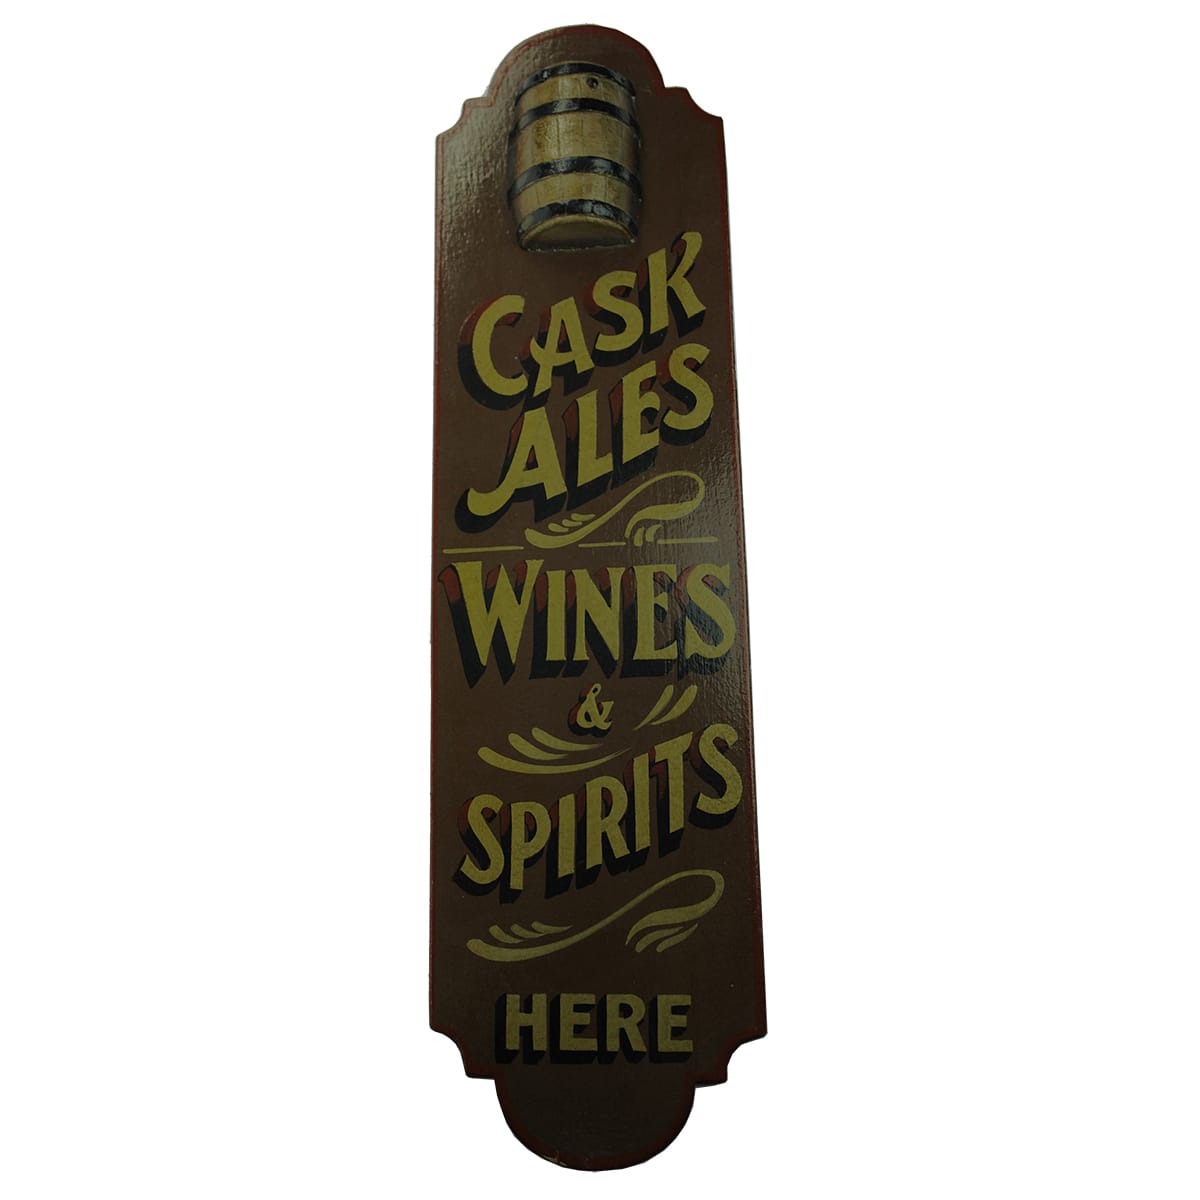 Wooden Advertising Board. Cask Ales Wines & Spirits.